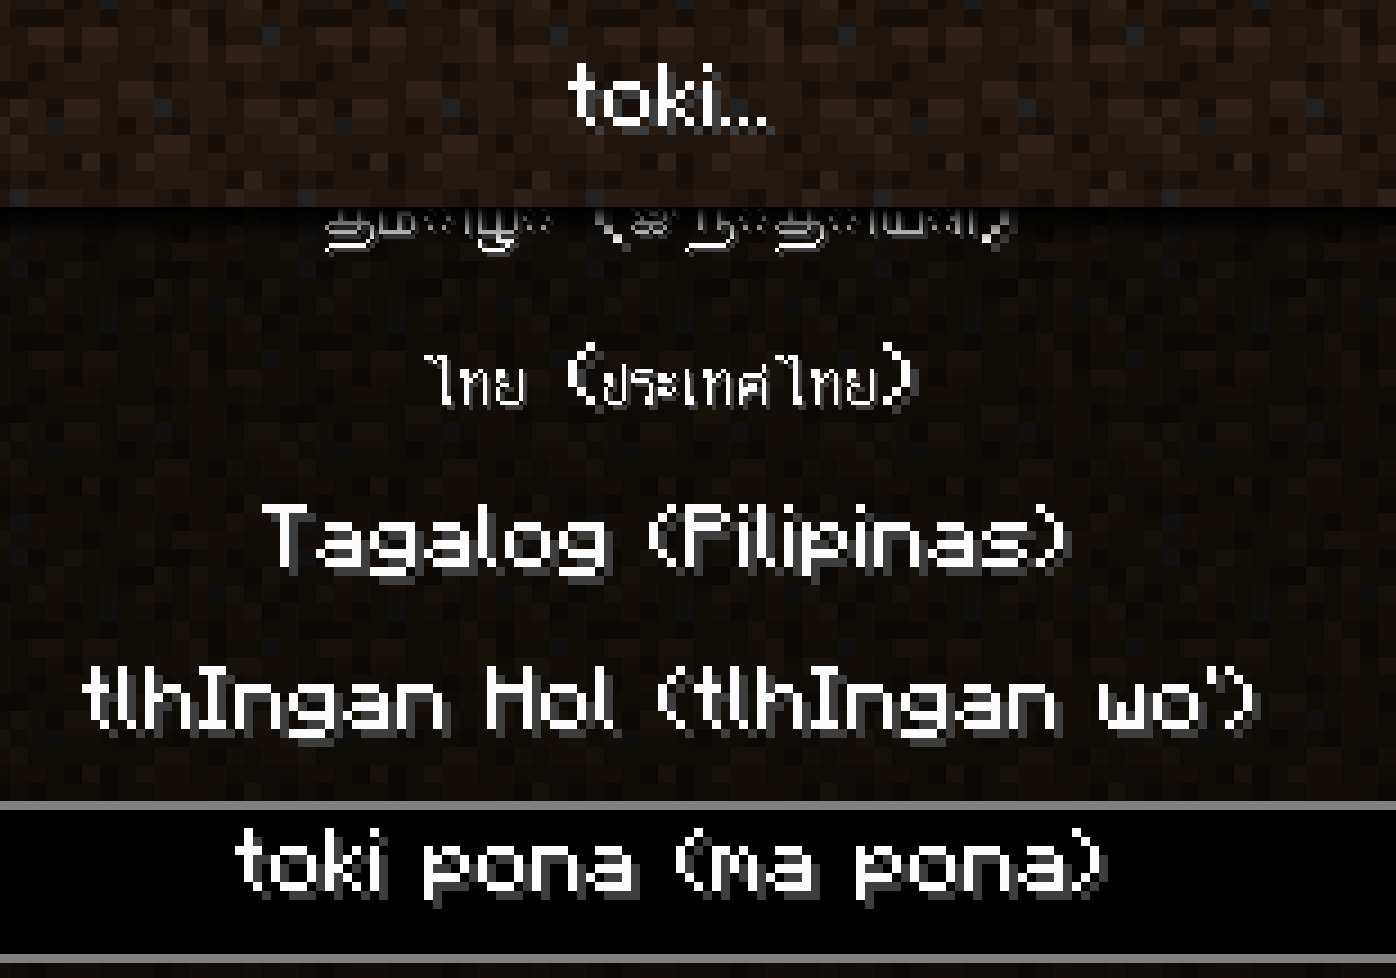 Mincraft language menu with toki pona selected